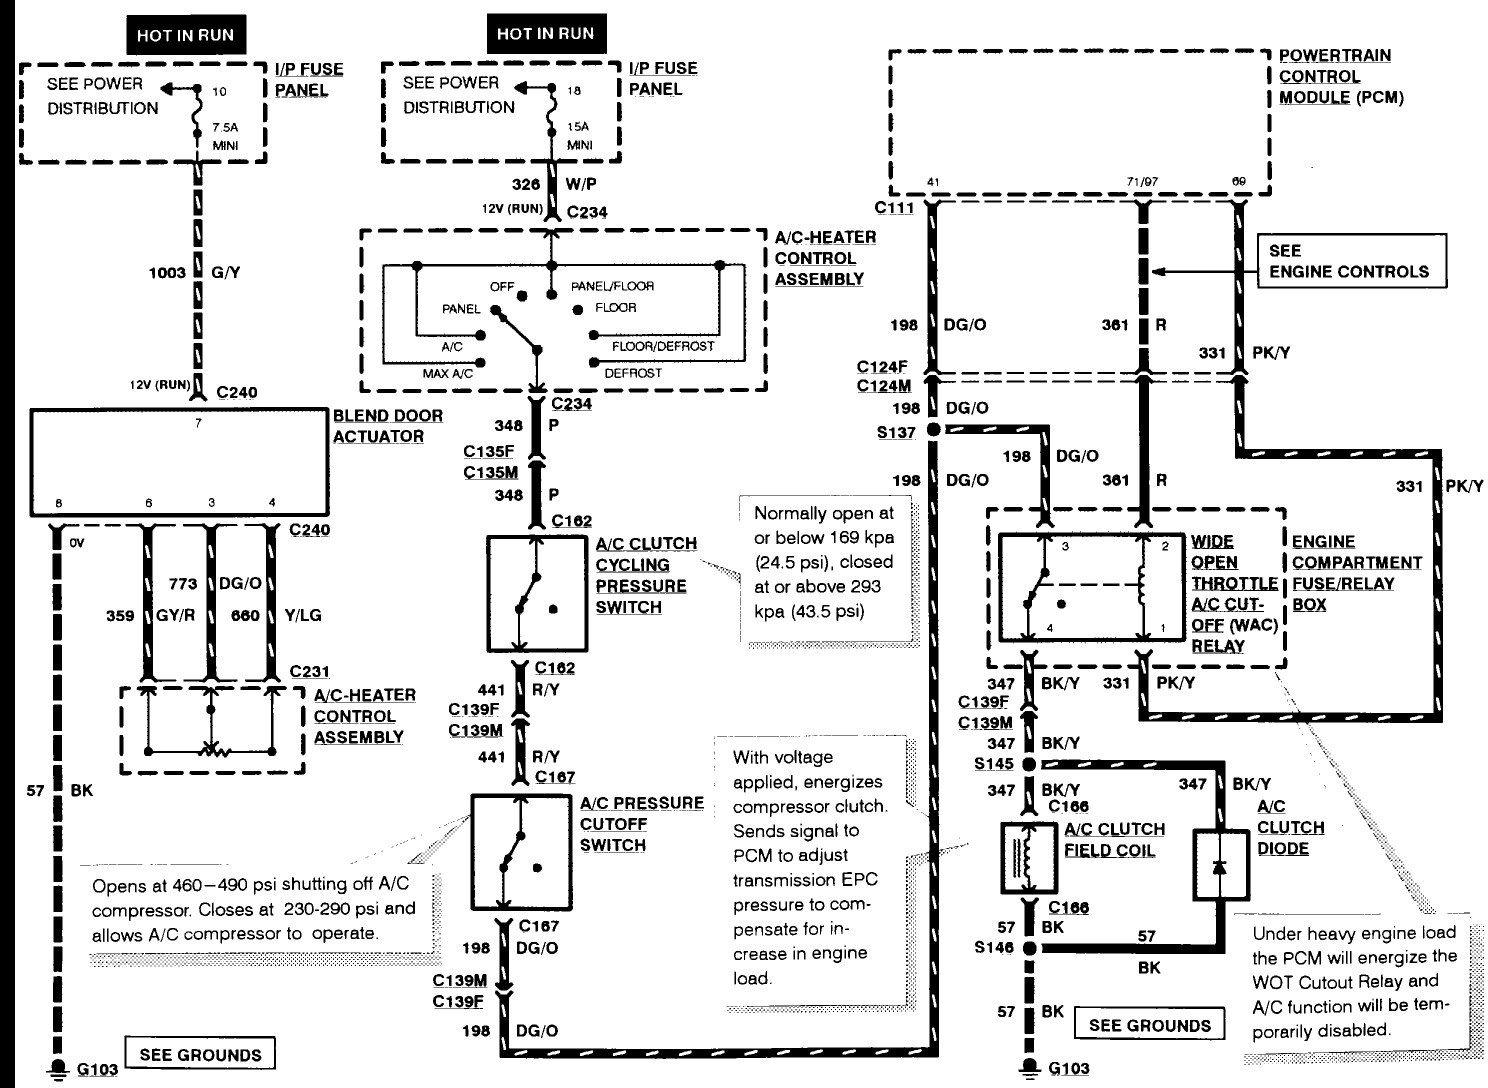 Http Wikidiyfaqorguk 0 0d Splanwiring Wire Center • Air Pressor Pressure Switch Wiring Diagram Inspirational